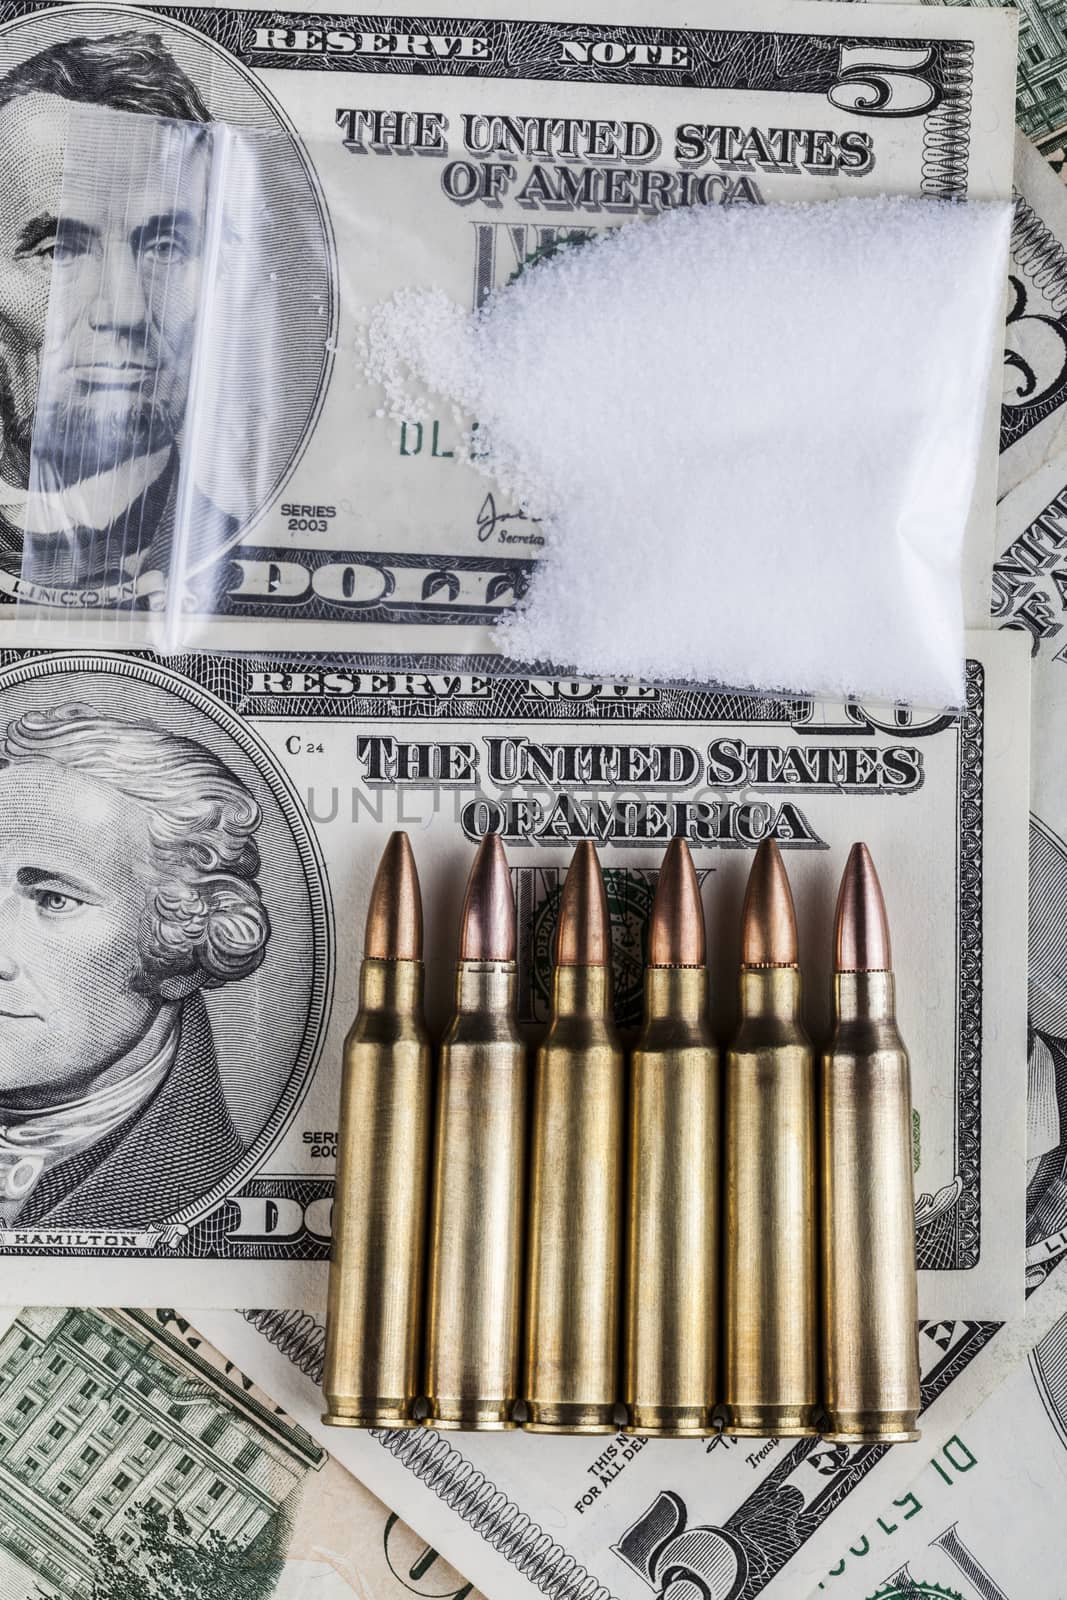 Bullets on dollar banknotes with bag of white drug powder on black background